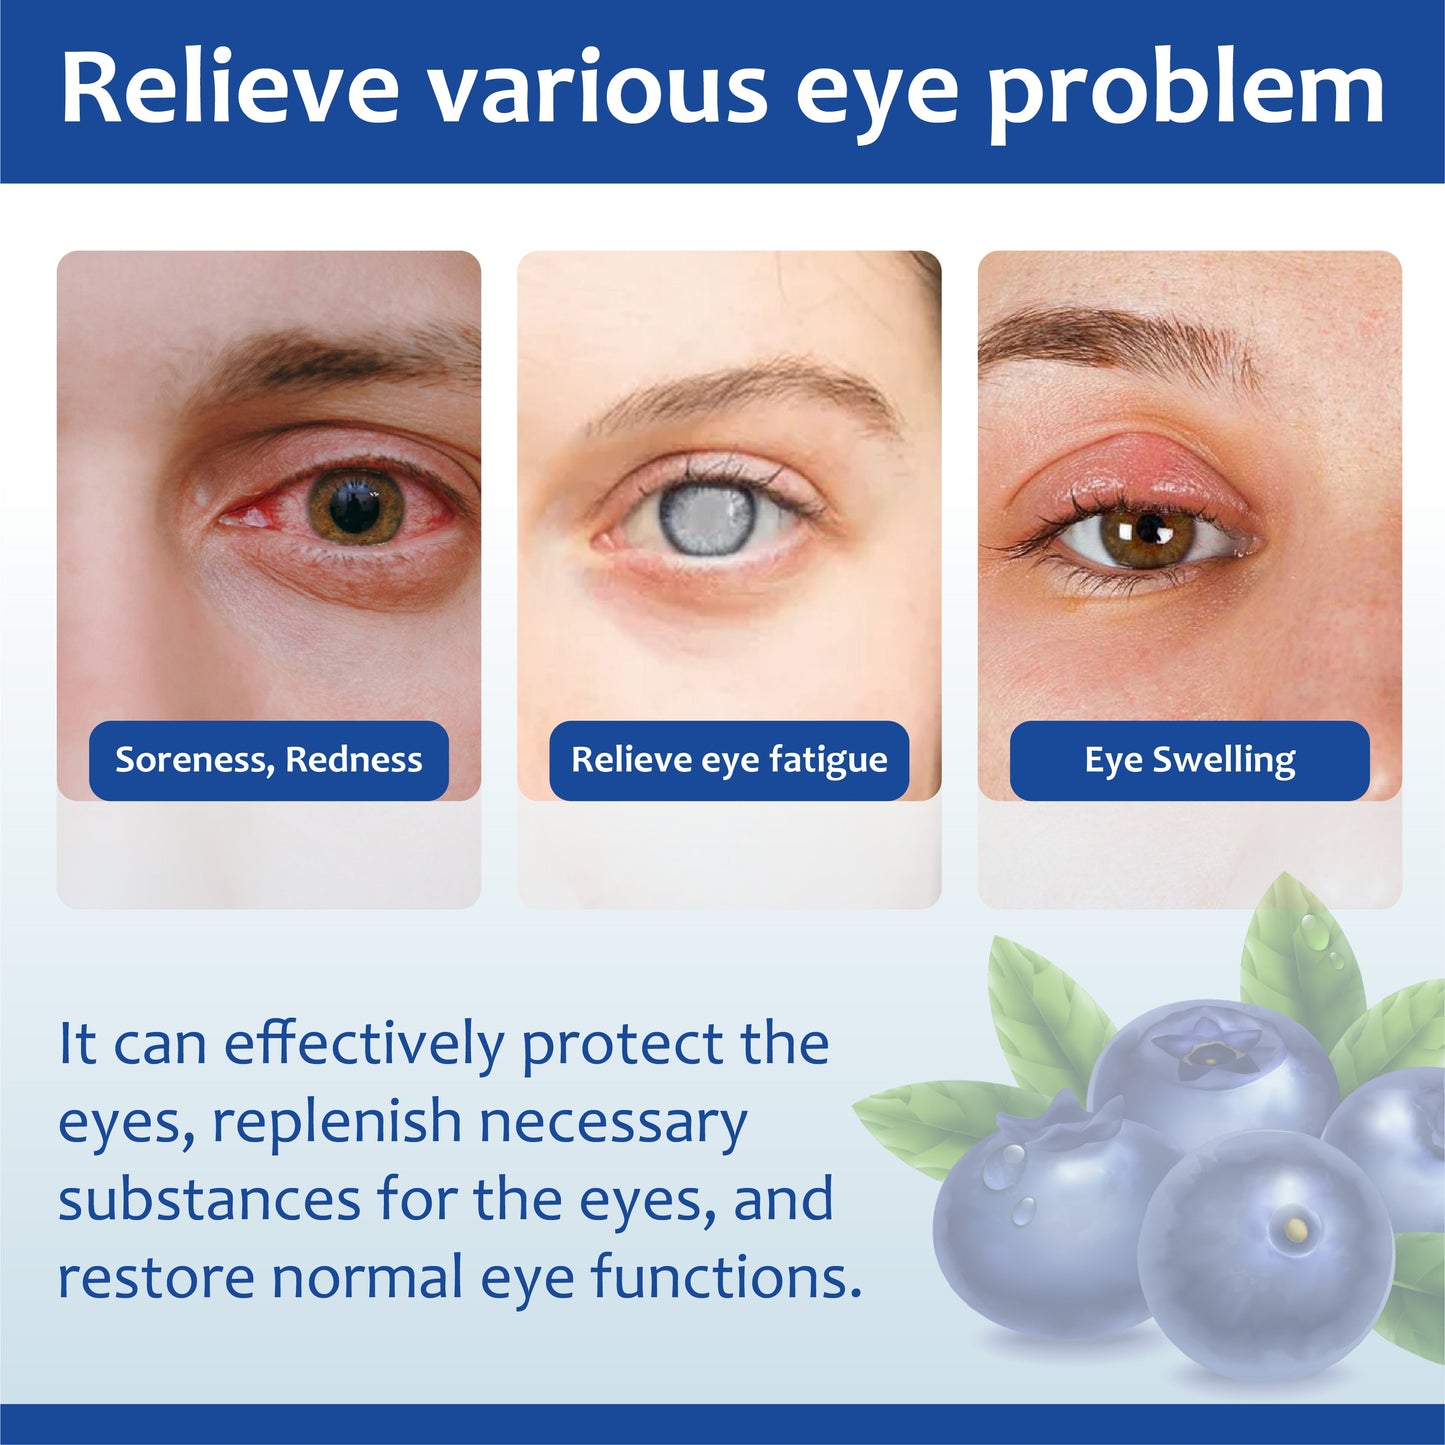 Vision RenewRestorative Eye Drops